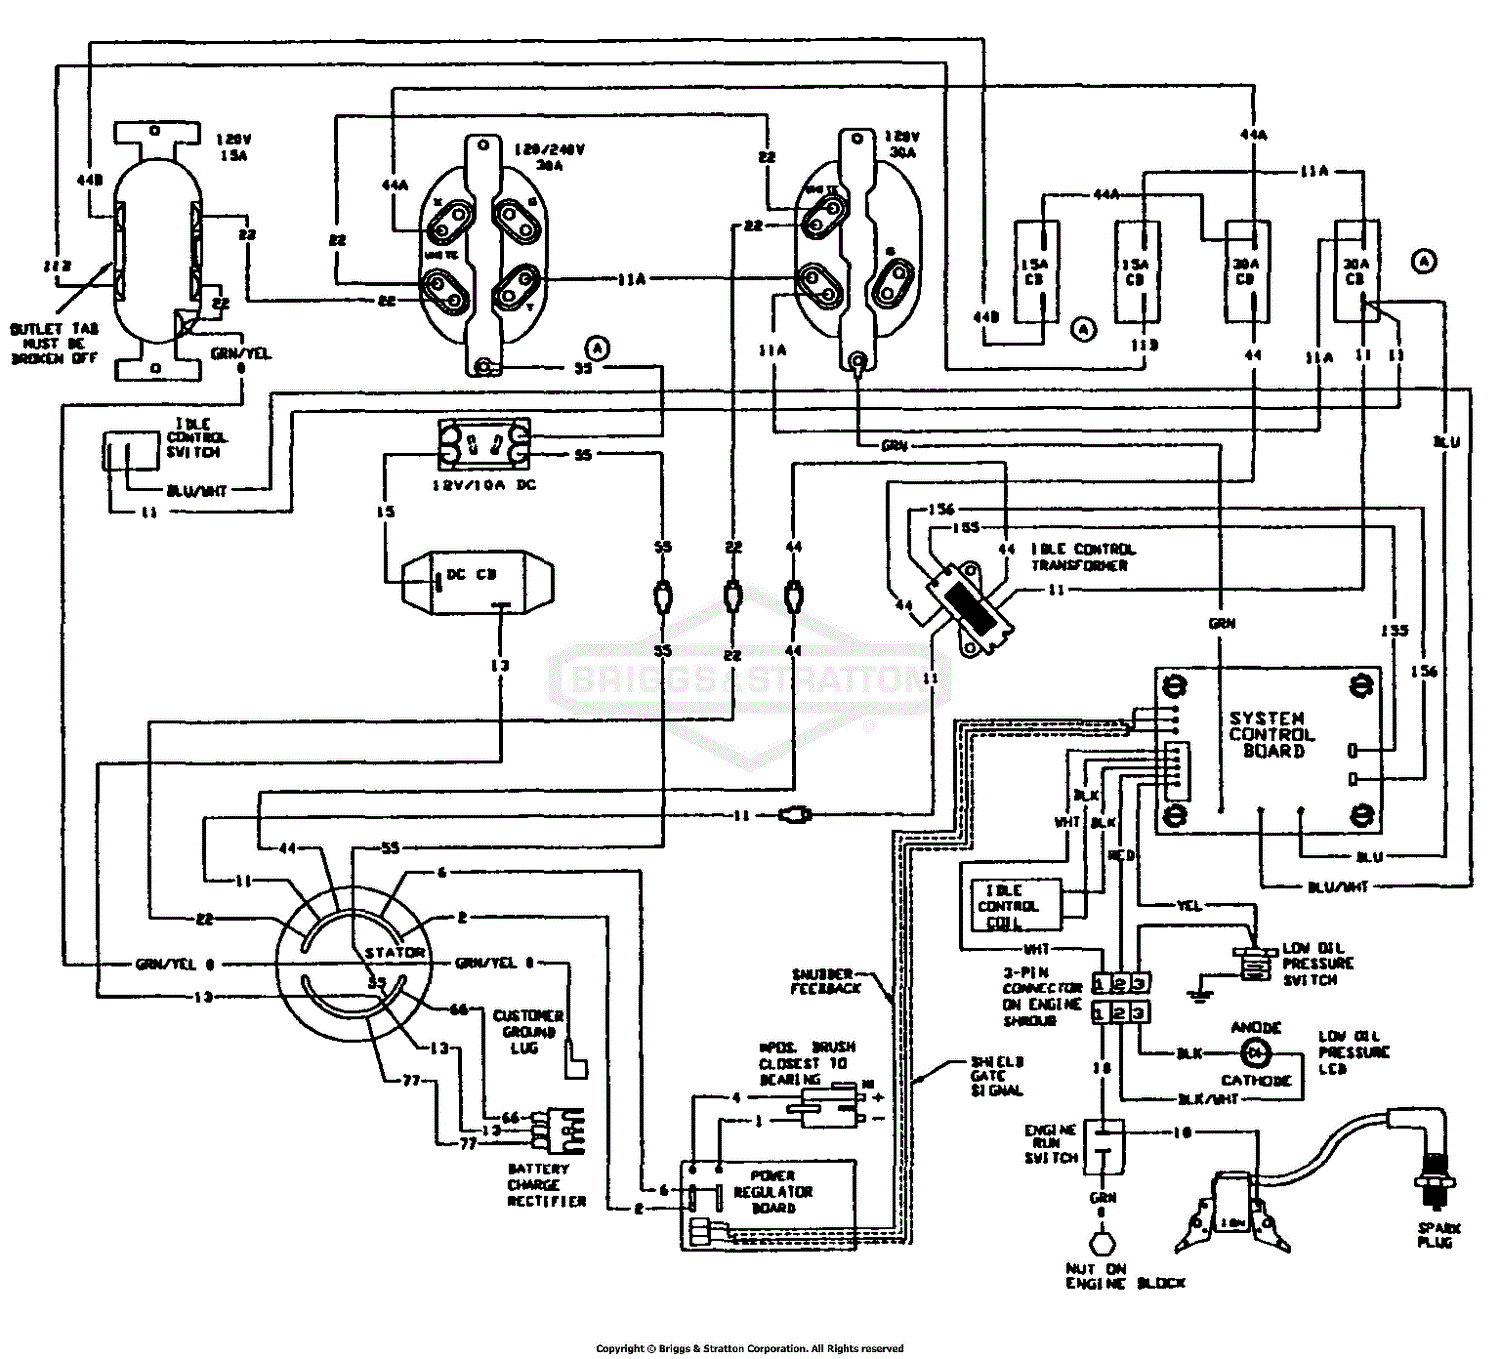 Generac 5500xl Wiring Diagram - Wiring Diagram